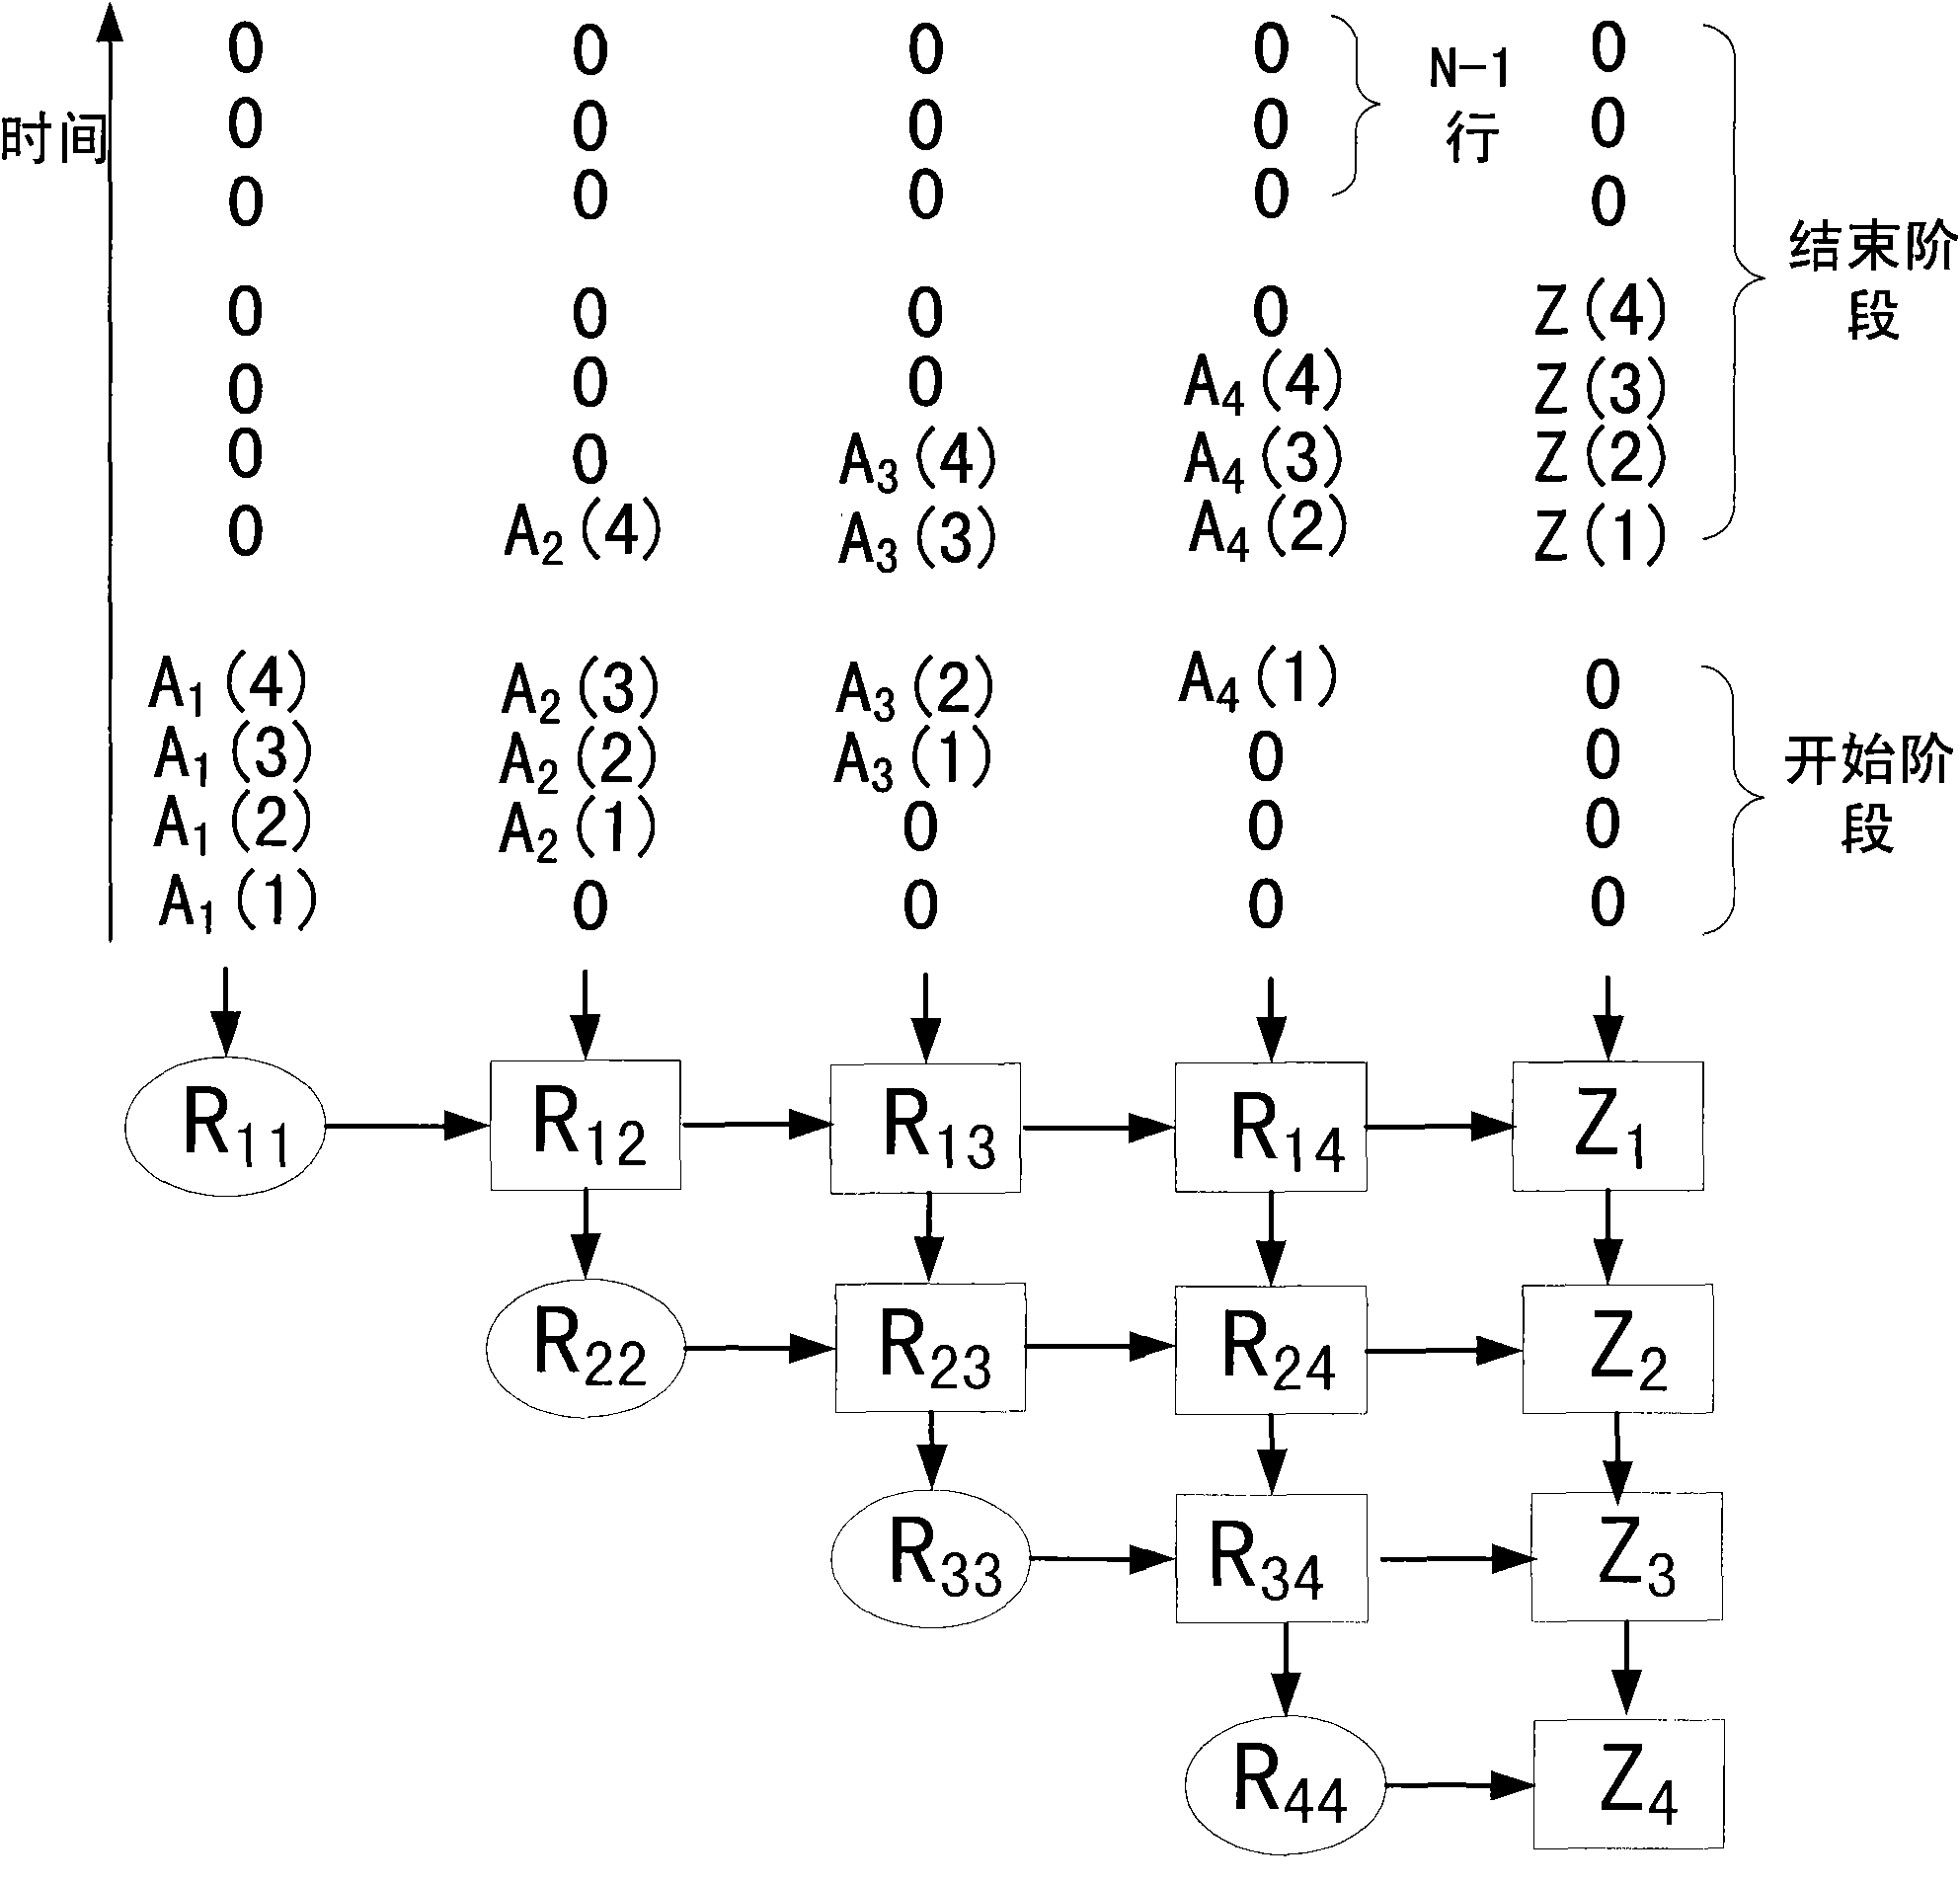 FPGA device for matrix QR decomposition